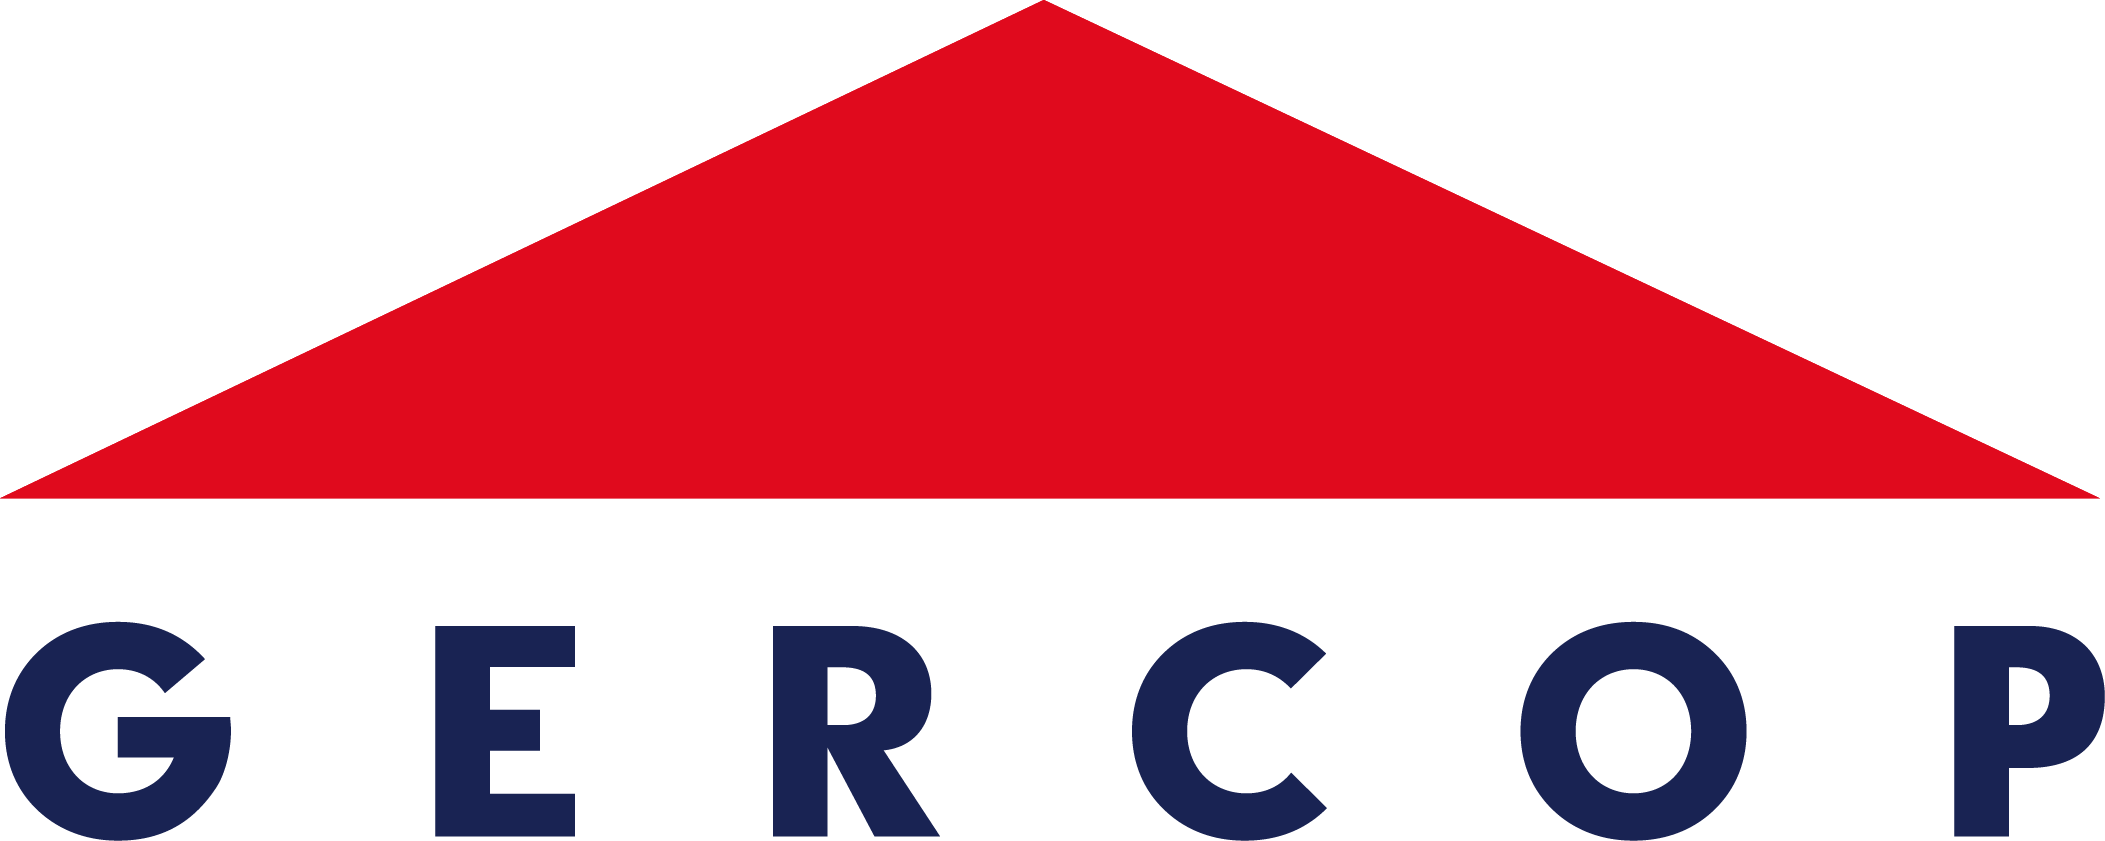 Gercop Logo Logiciels Immobilier